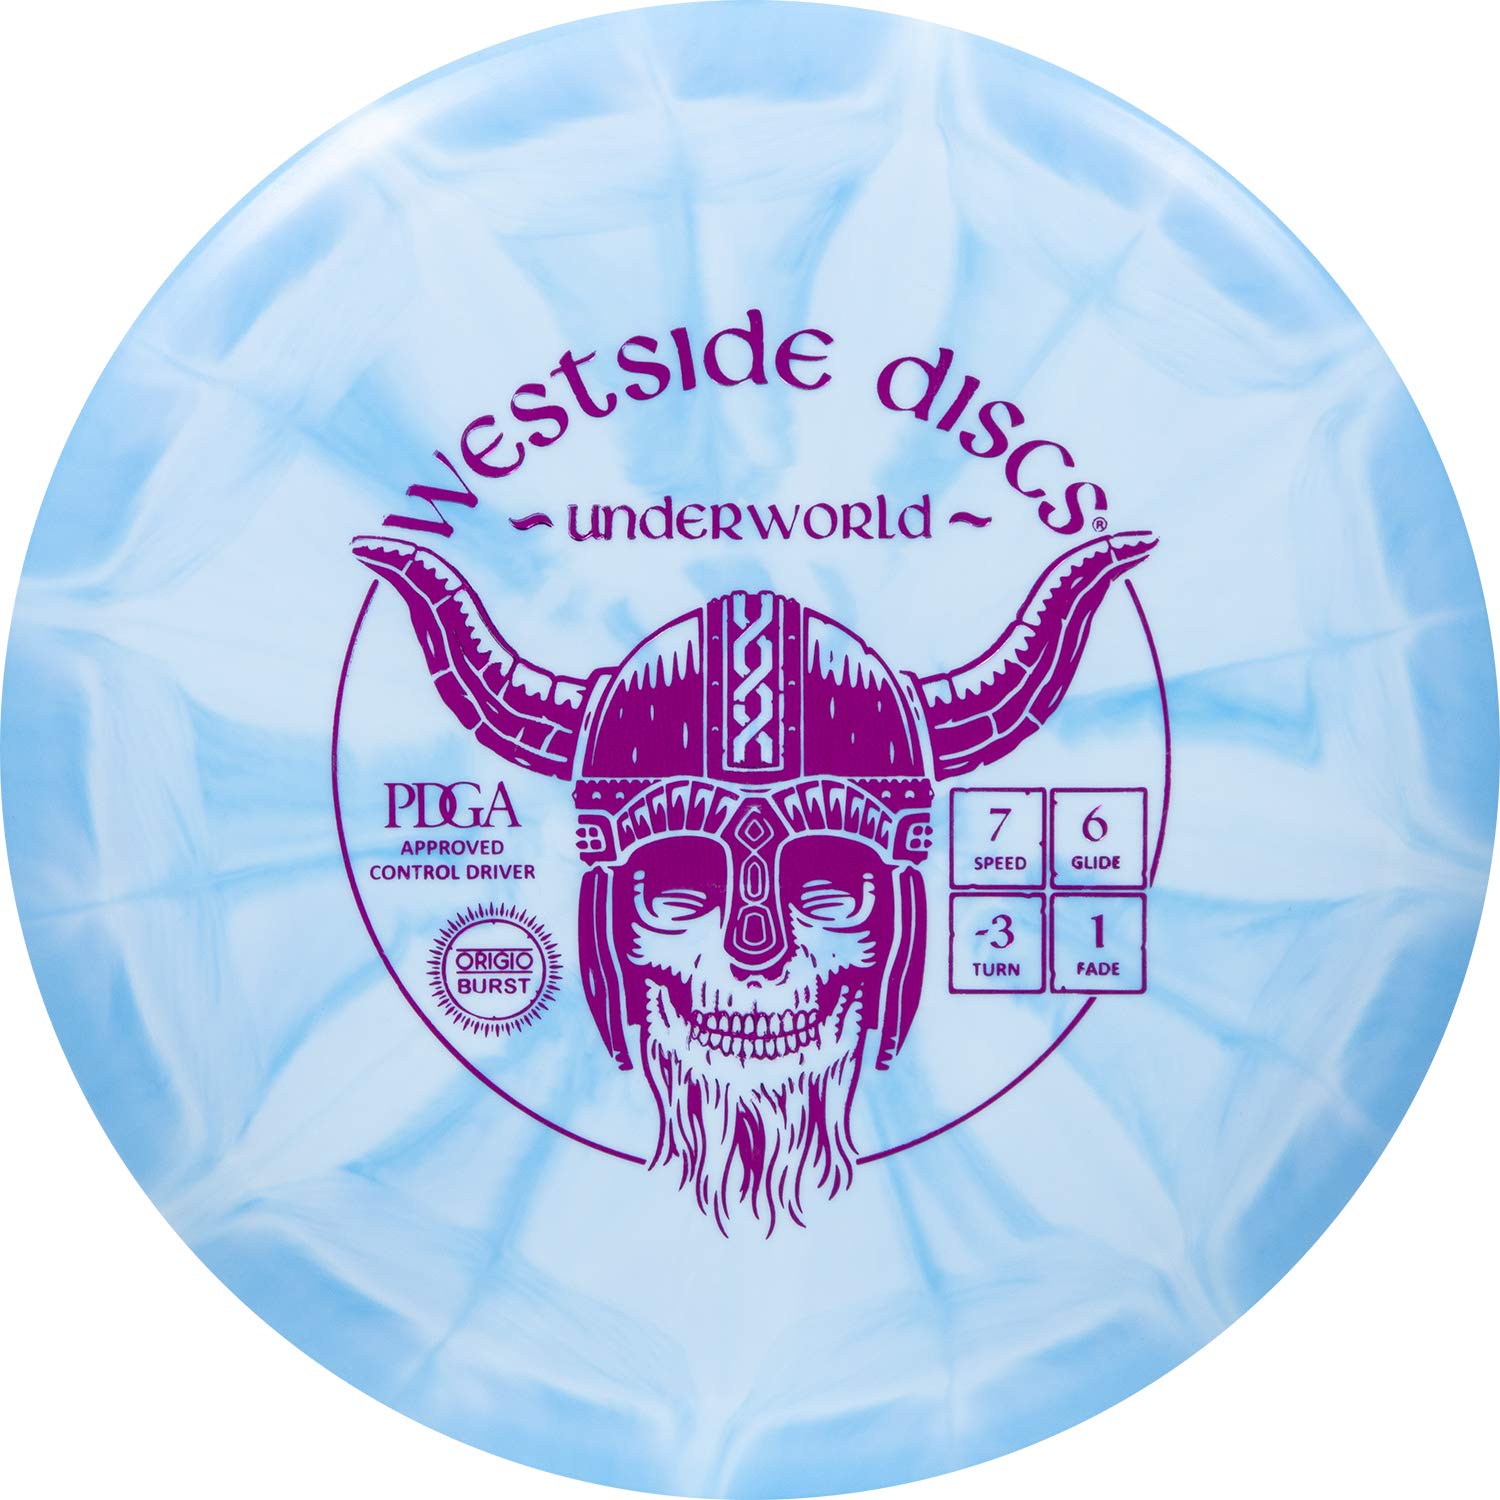 Westside Discs Origio Burst Underworld